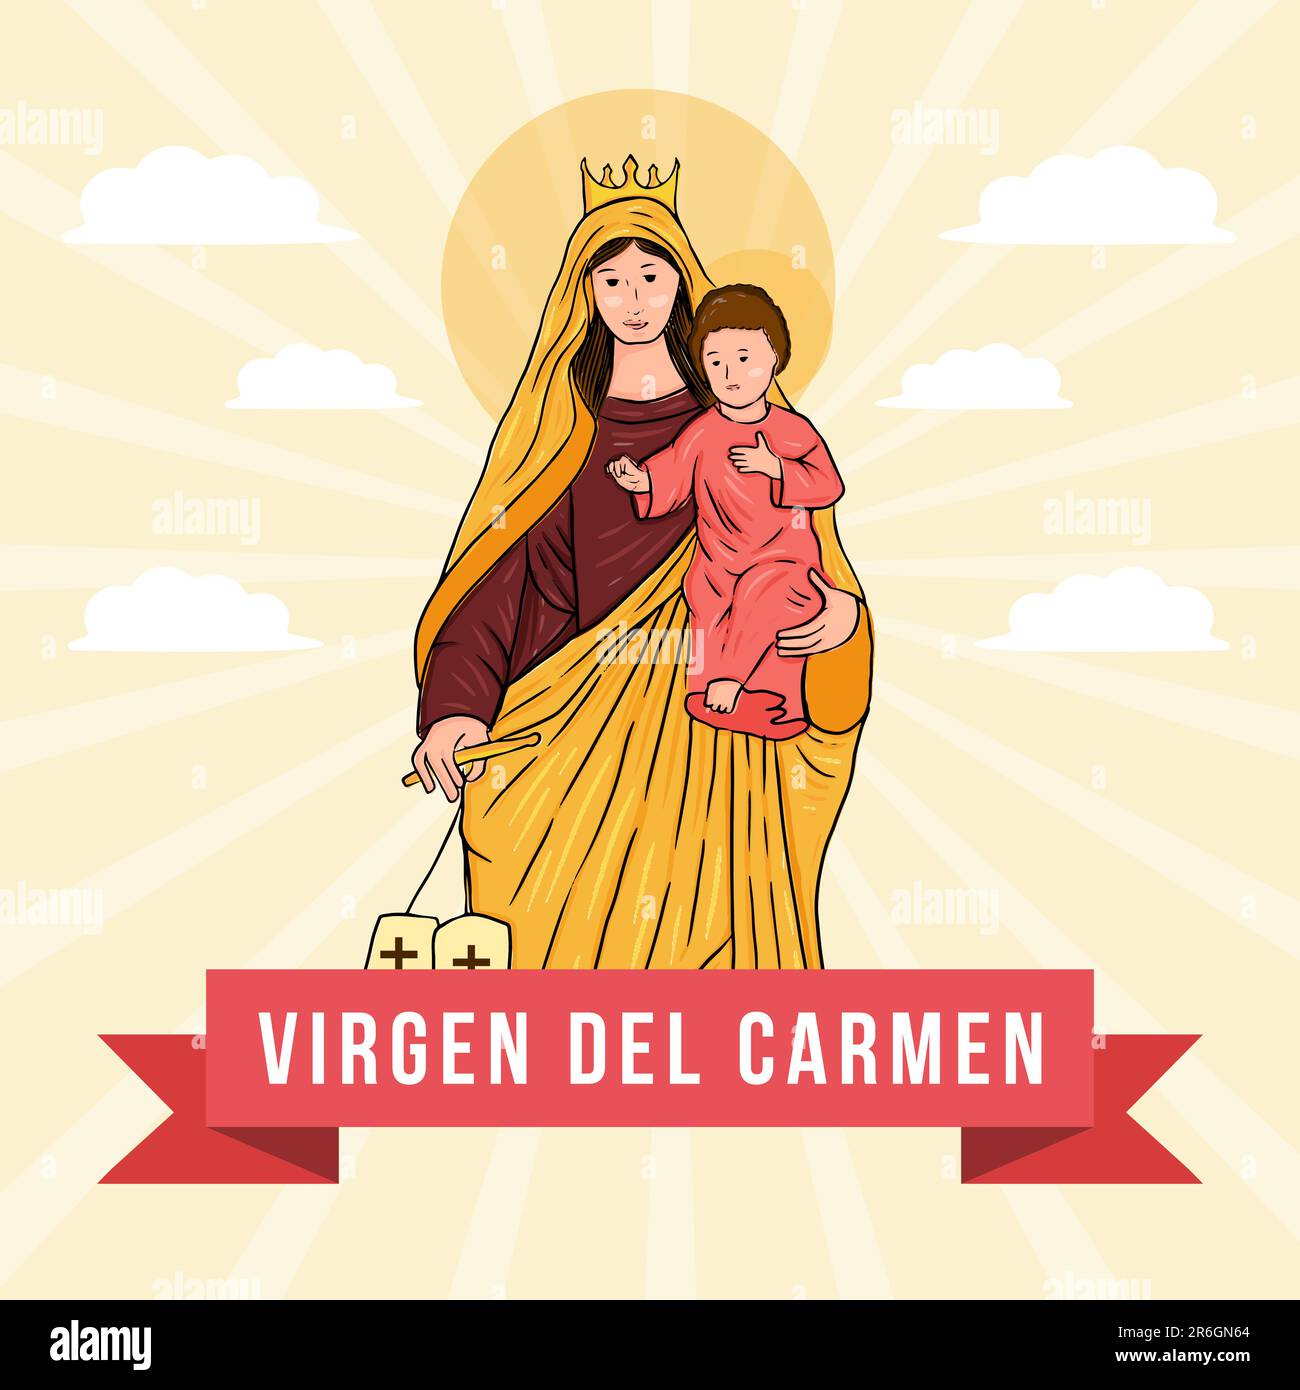 virgen del carmen hand drawn illustration in flat design style Stock Vector